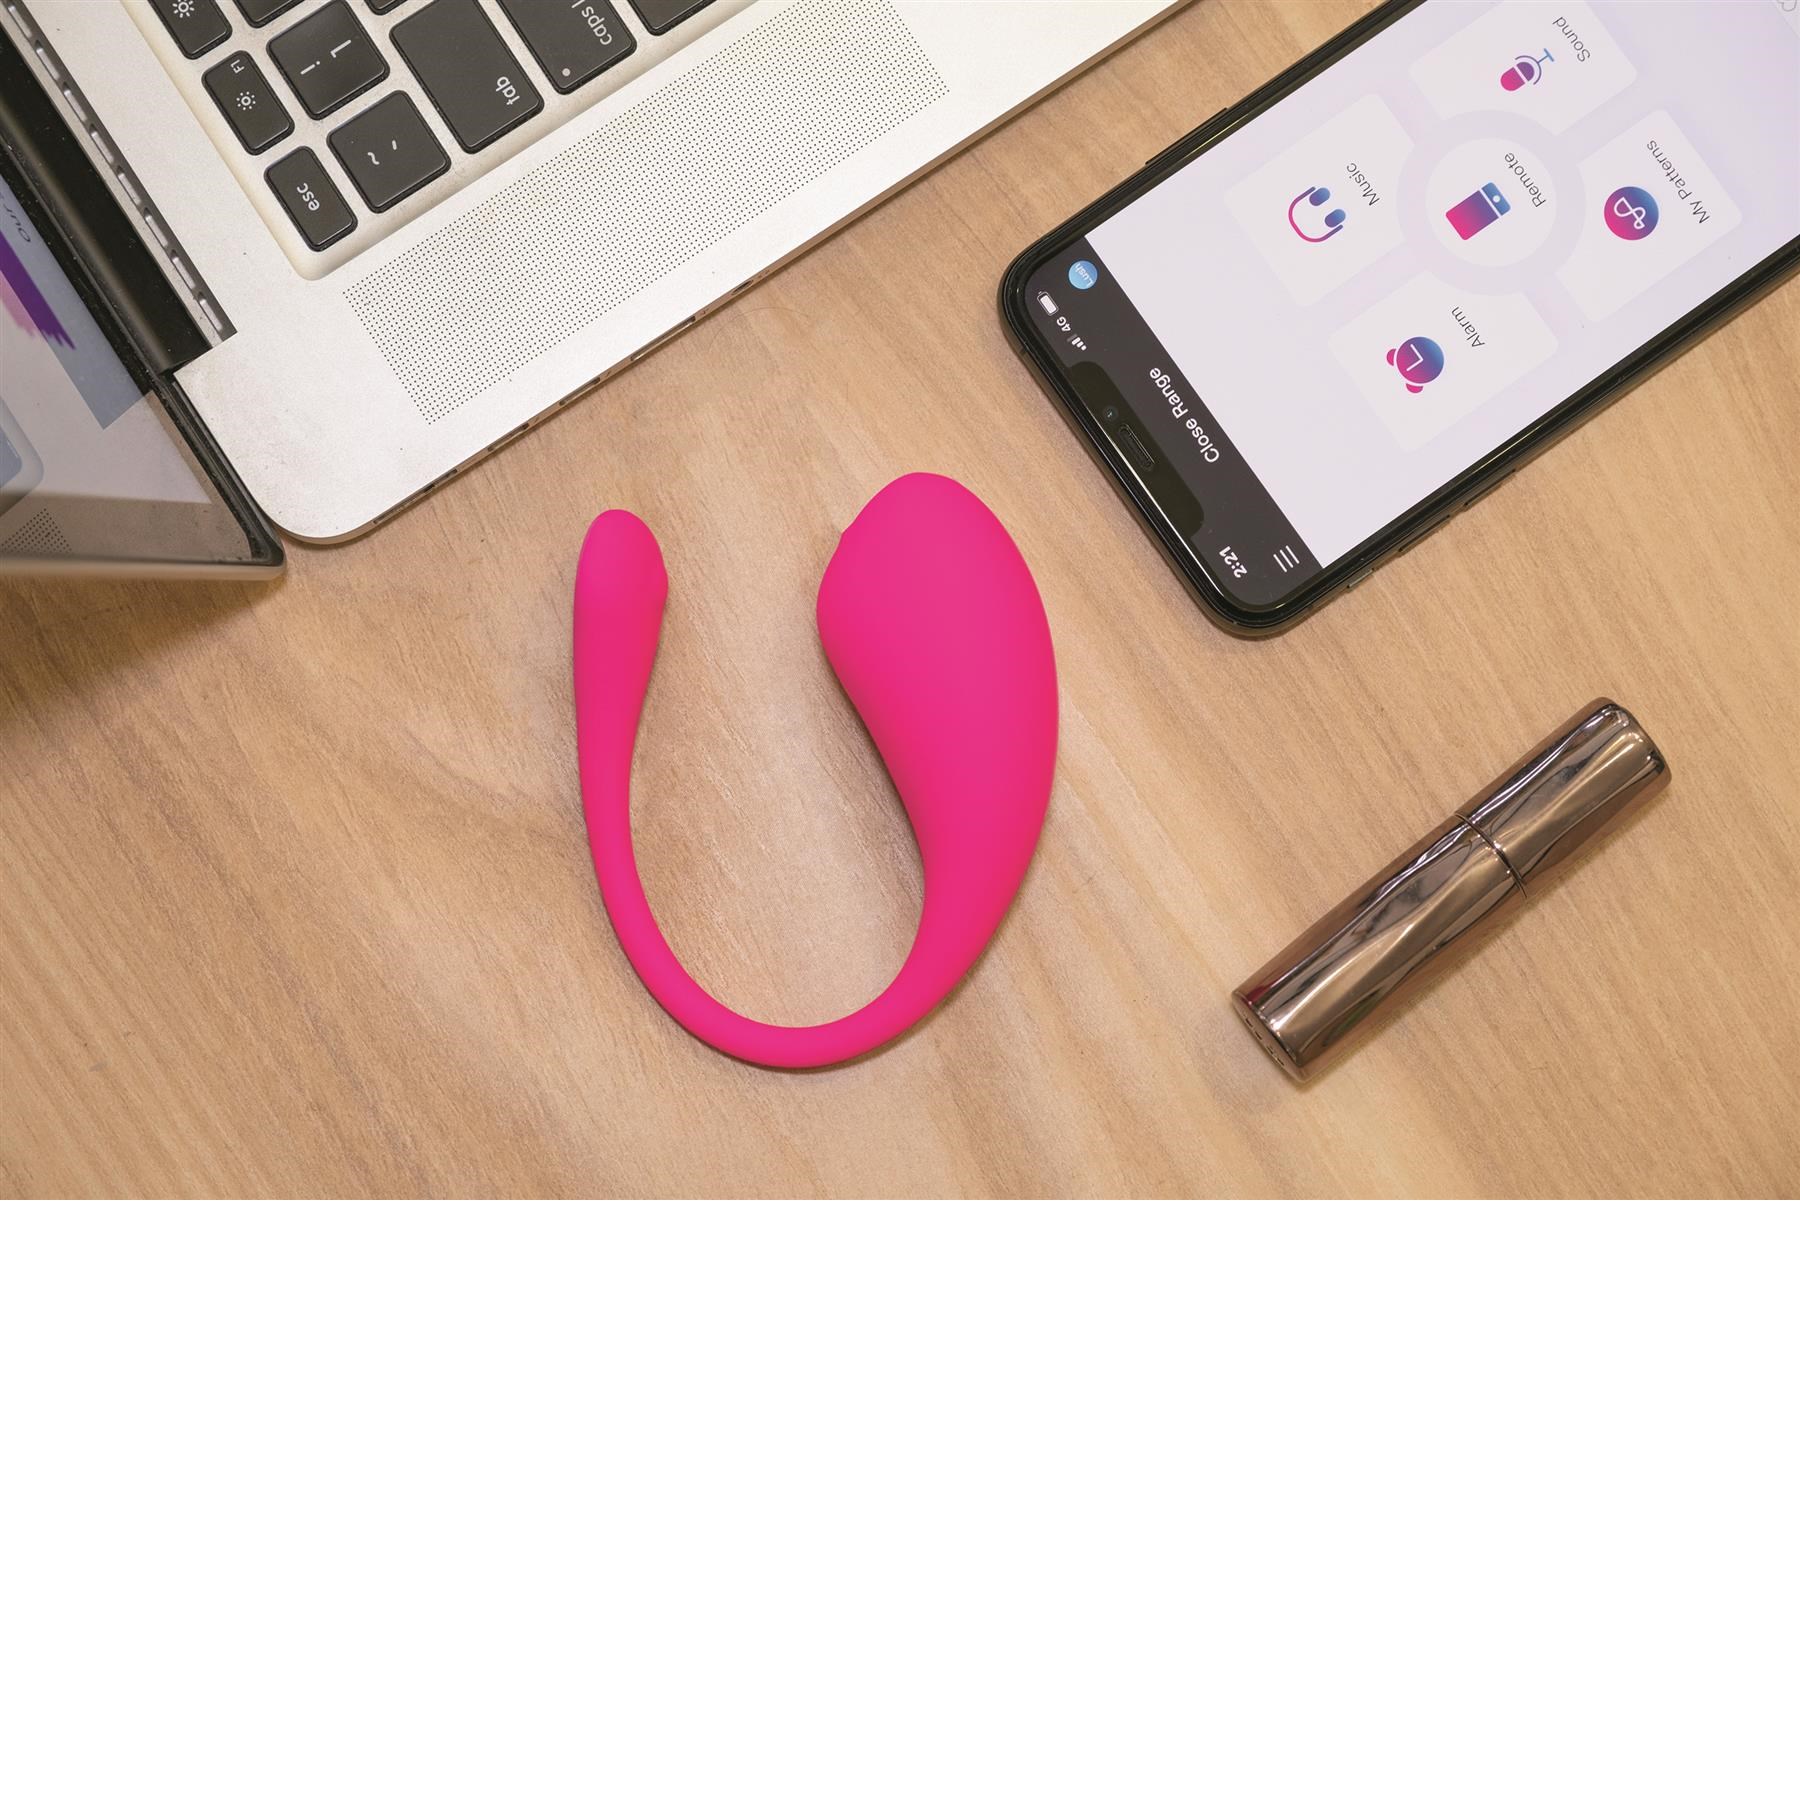 Lovense Lush 3 Bluetooth Bullet Vibrator Lifestyle Shot on Desk